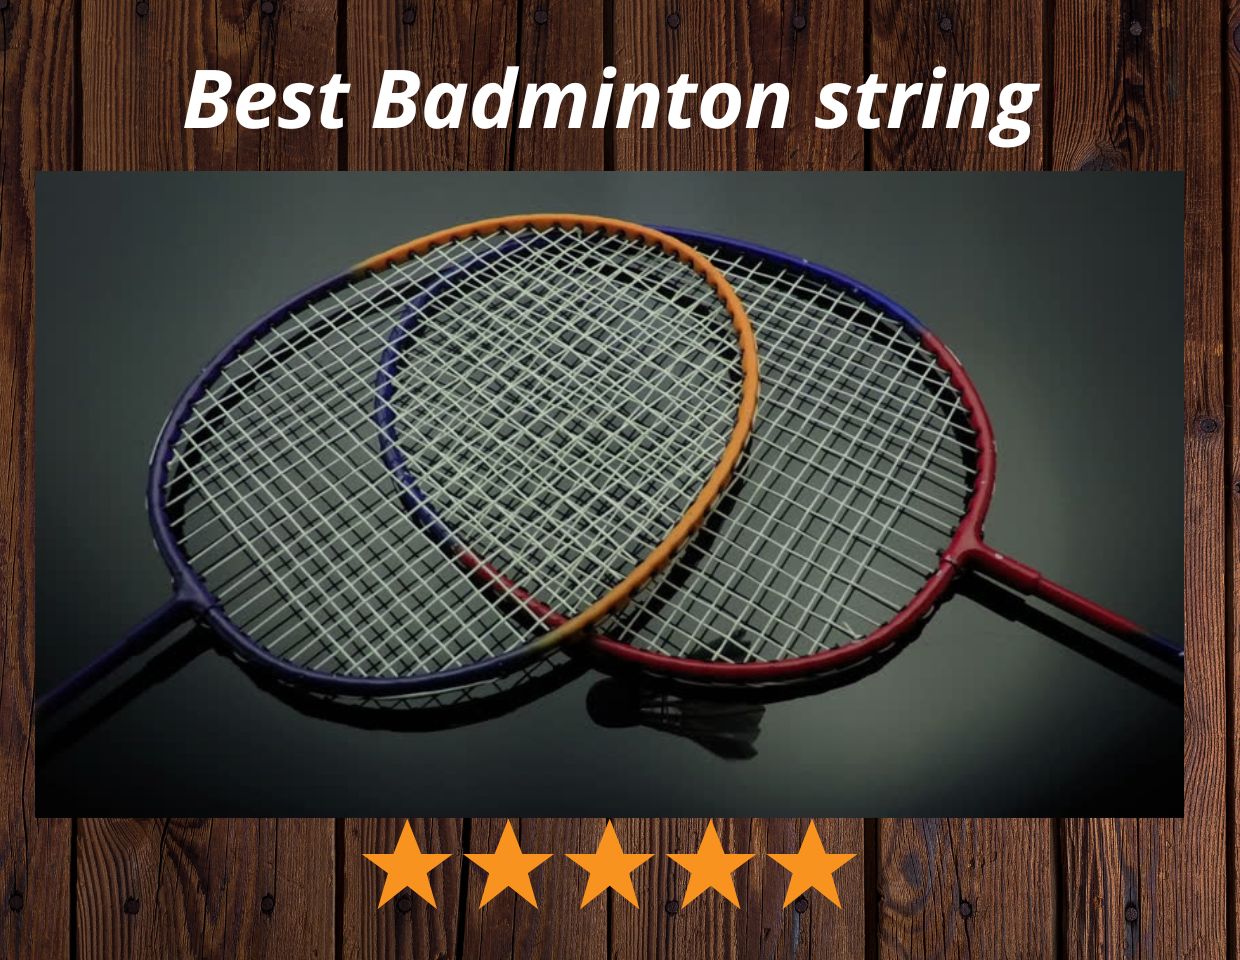 Best Badminton string